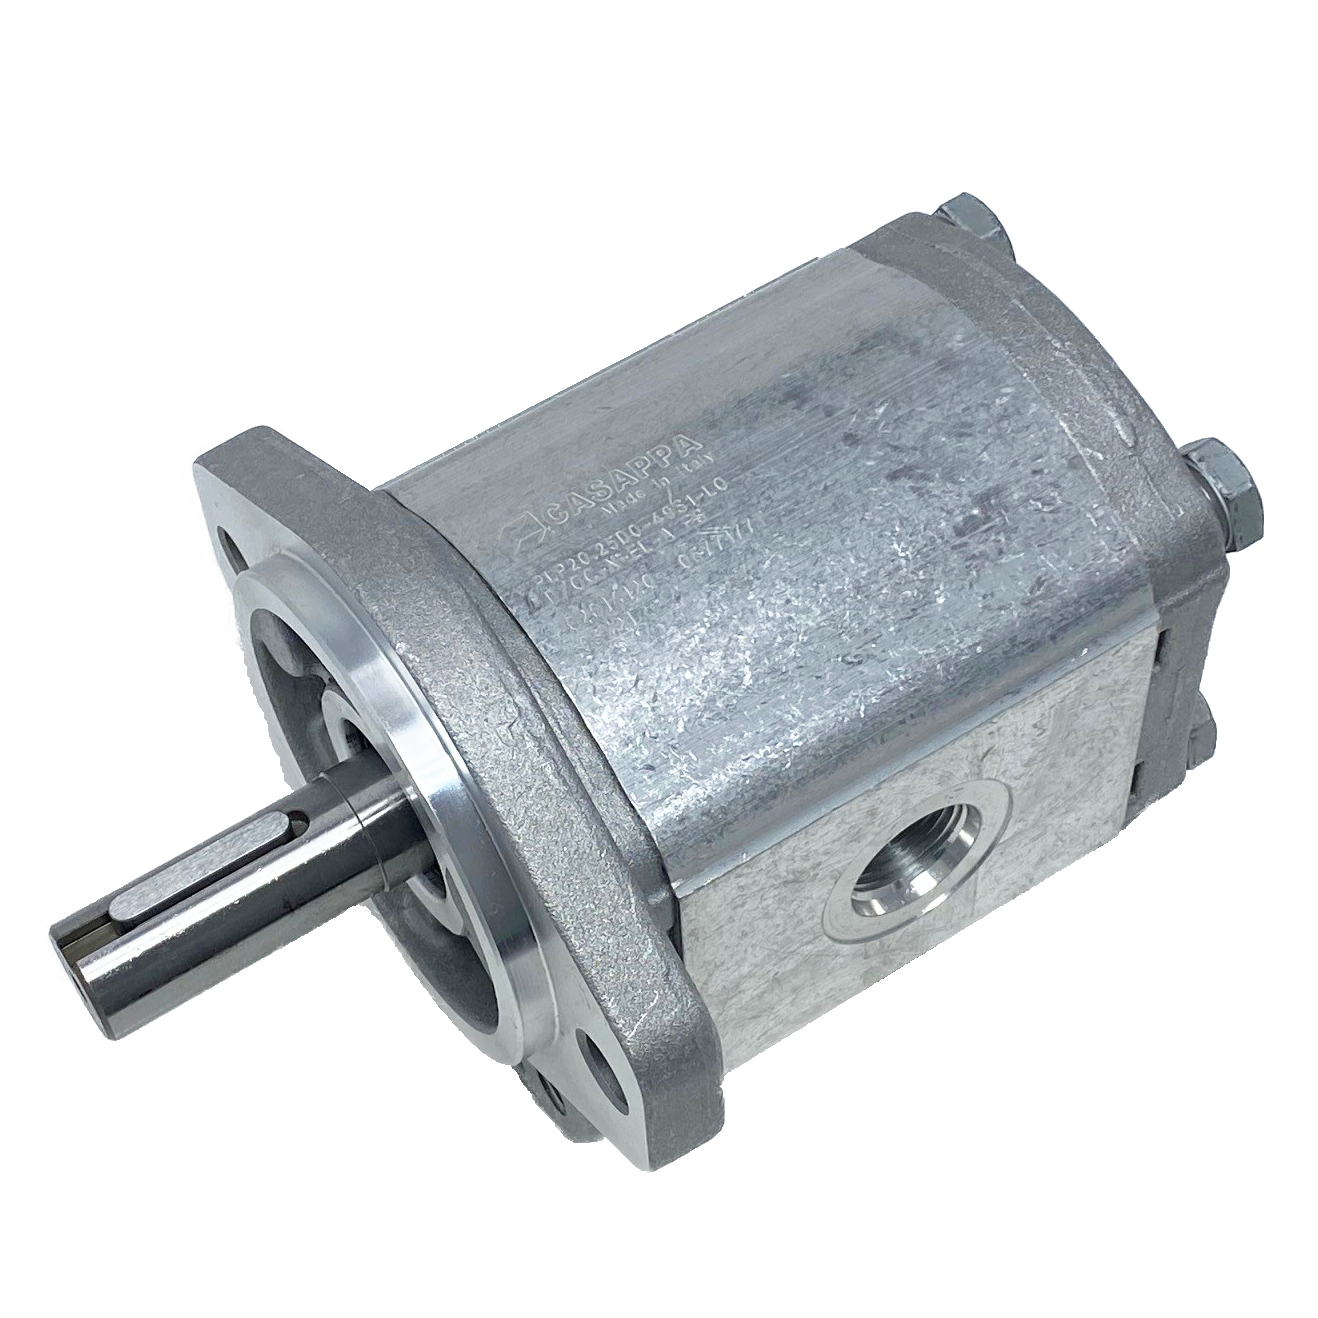 PLM20.31,5R0-49S1-LOC/OD-N-EL : Casappa Polaris Gear Motor, 33.03cc, 1885psi Rated, 2465RPM, Reversible Rear External Drain, 3/4" Bore x 3/16" Key Shaft, SAE A 2-Bolt Flange, 0.625 (5/8") #10 SAE Inlet, 0.75 (3/4") #12 SAE Outlet, Aluminum Body & Flange